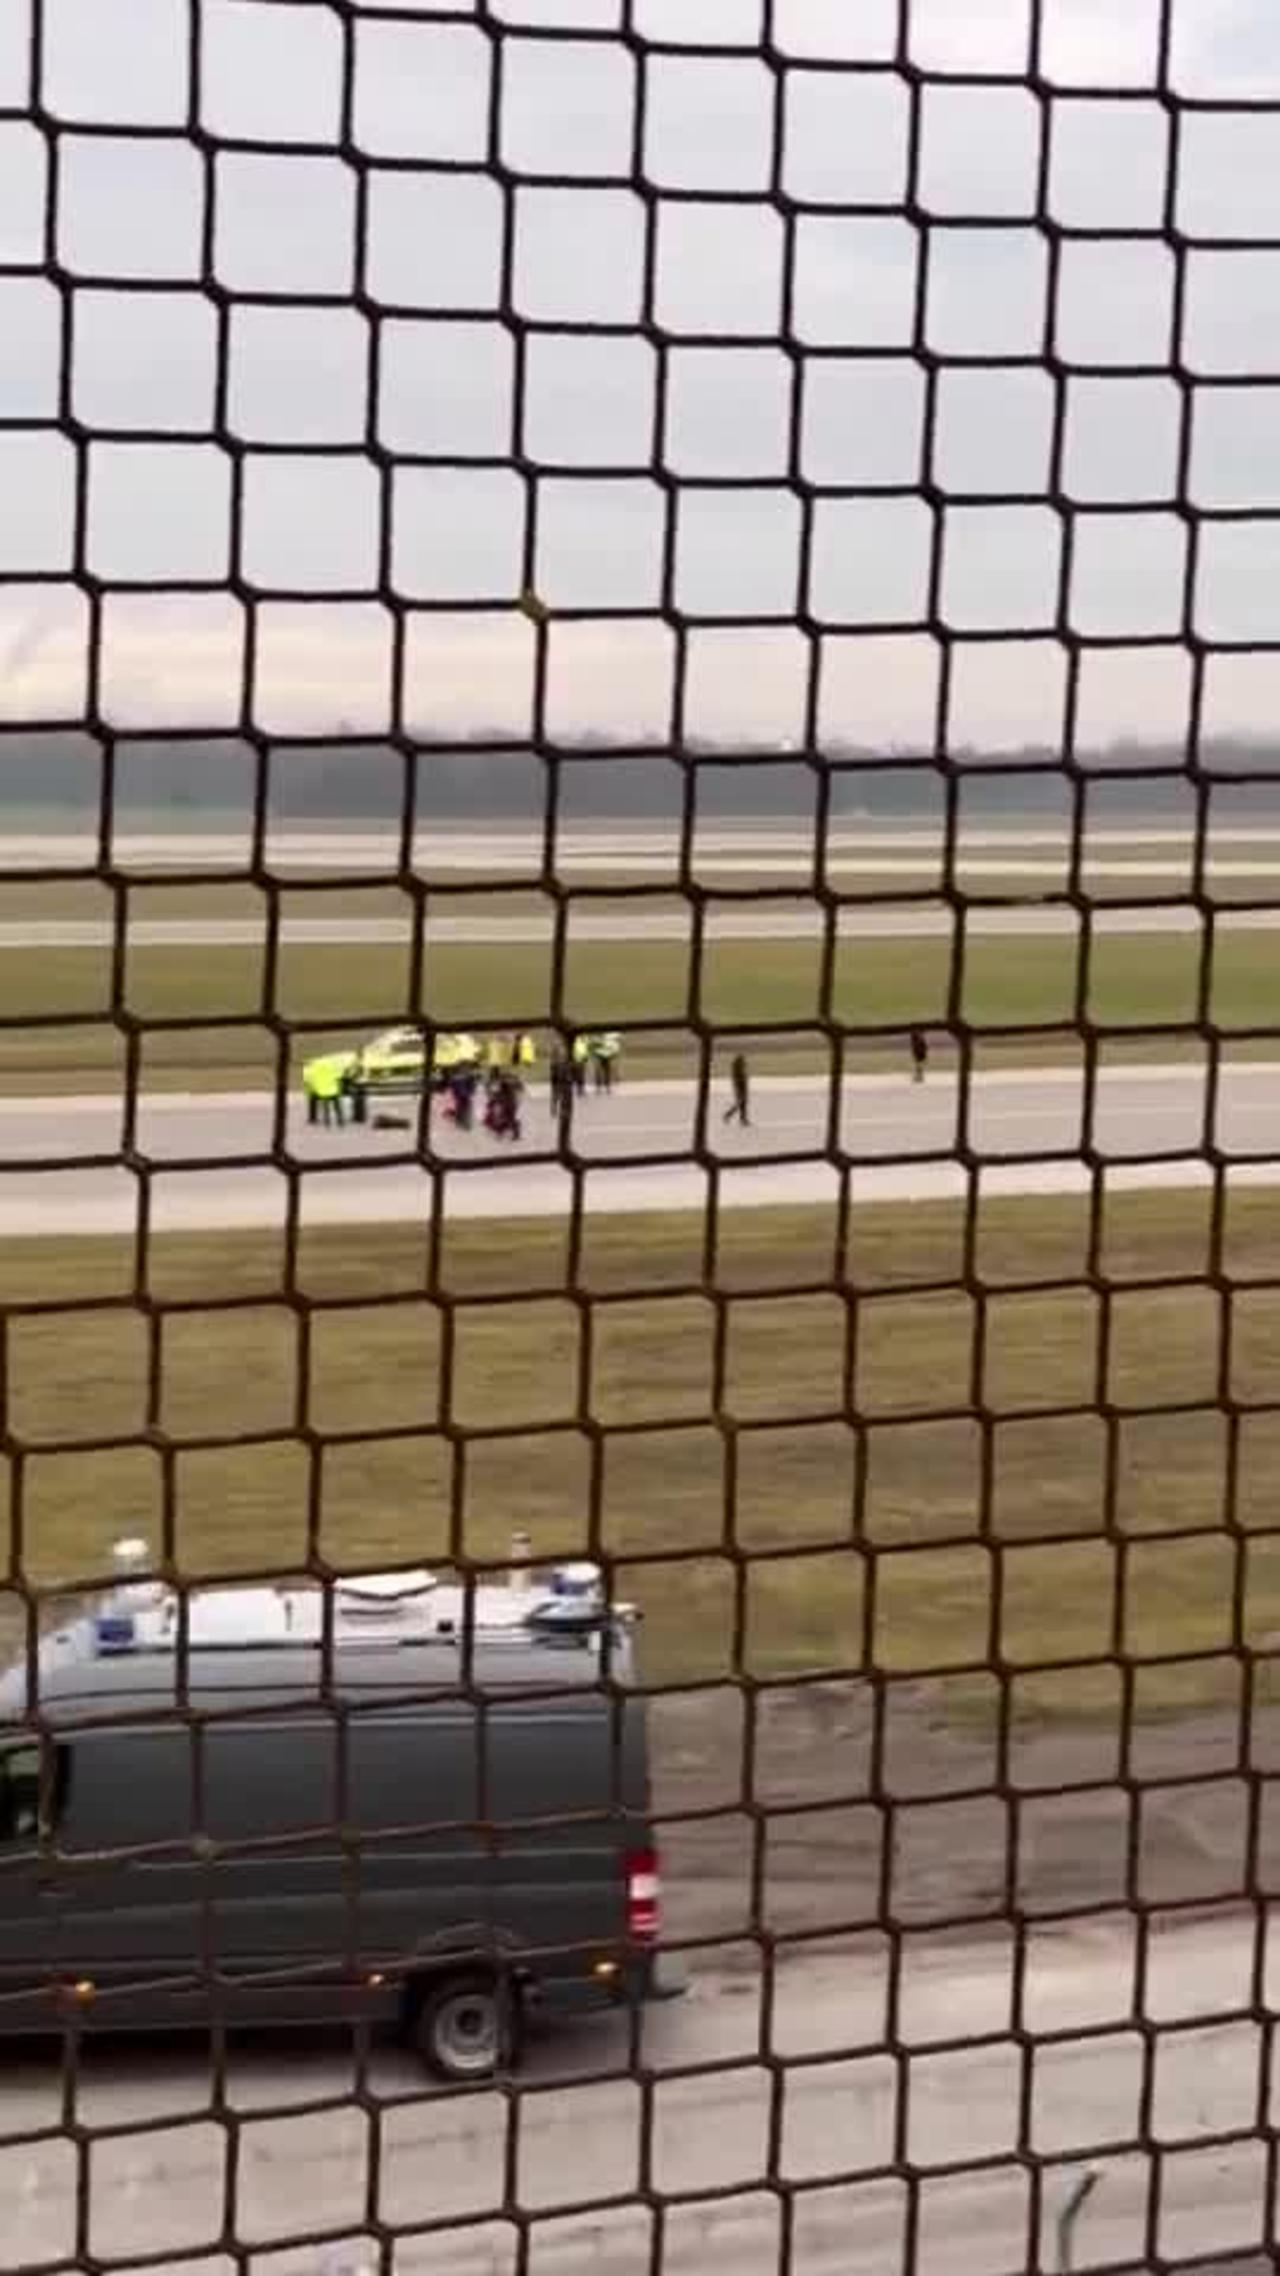 Both runways at Munich Airport closed because "climate chang